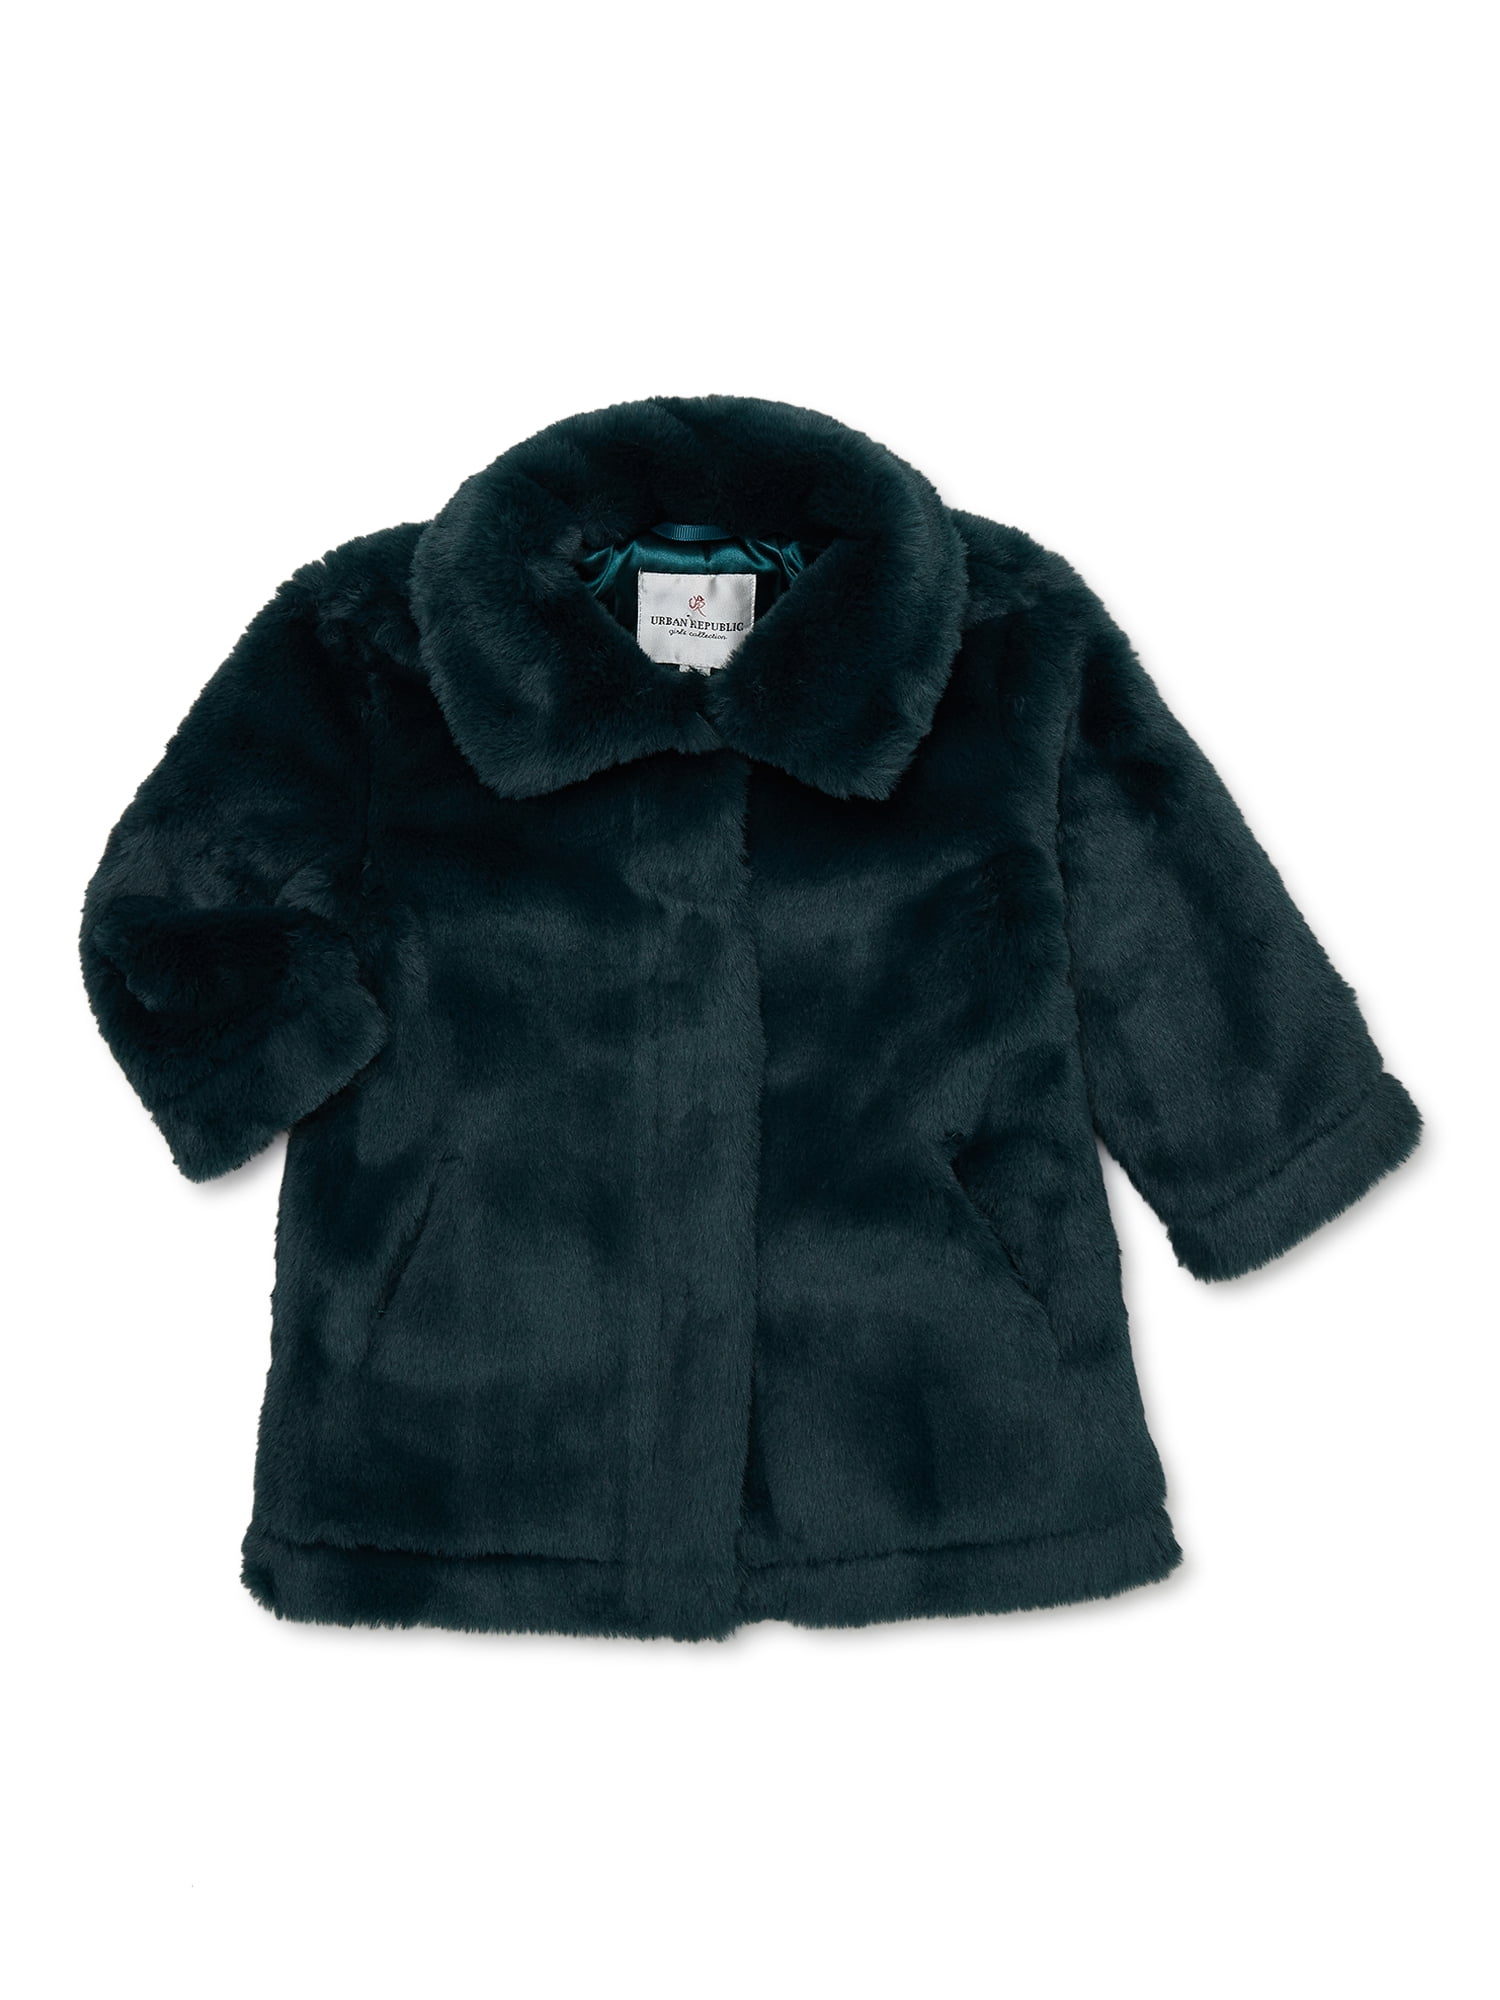 Urban Republic Toddler Girls Faux Fur Coat, Sizes 12M-5T - Walmart.com